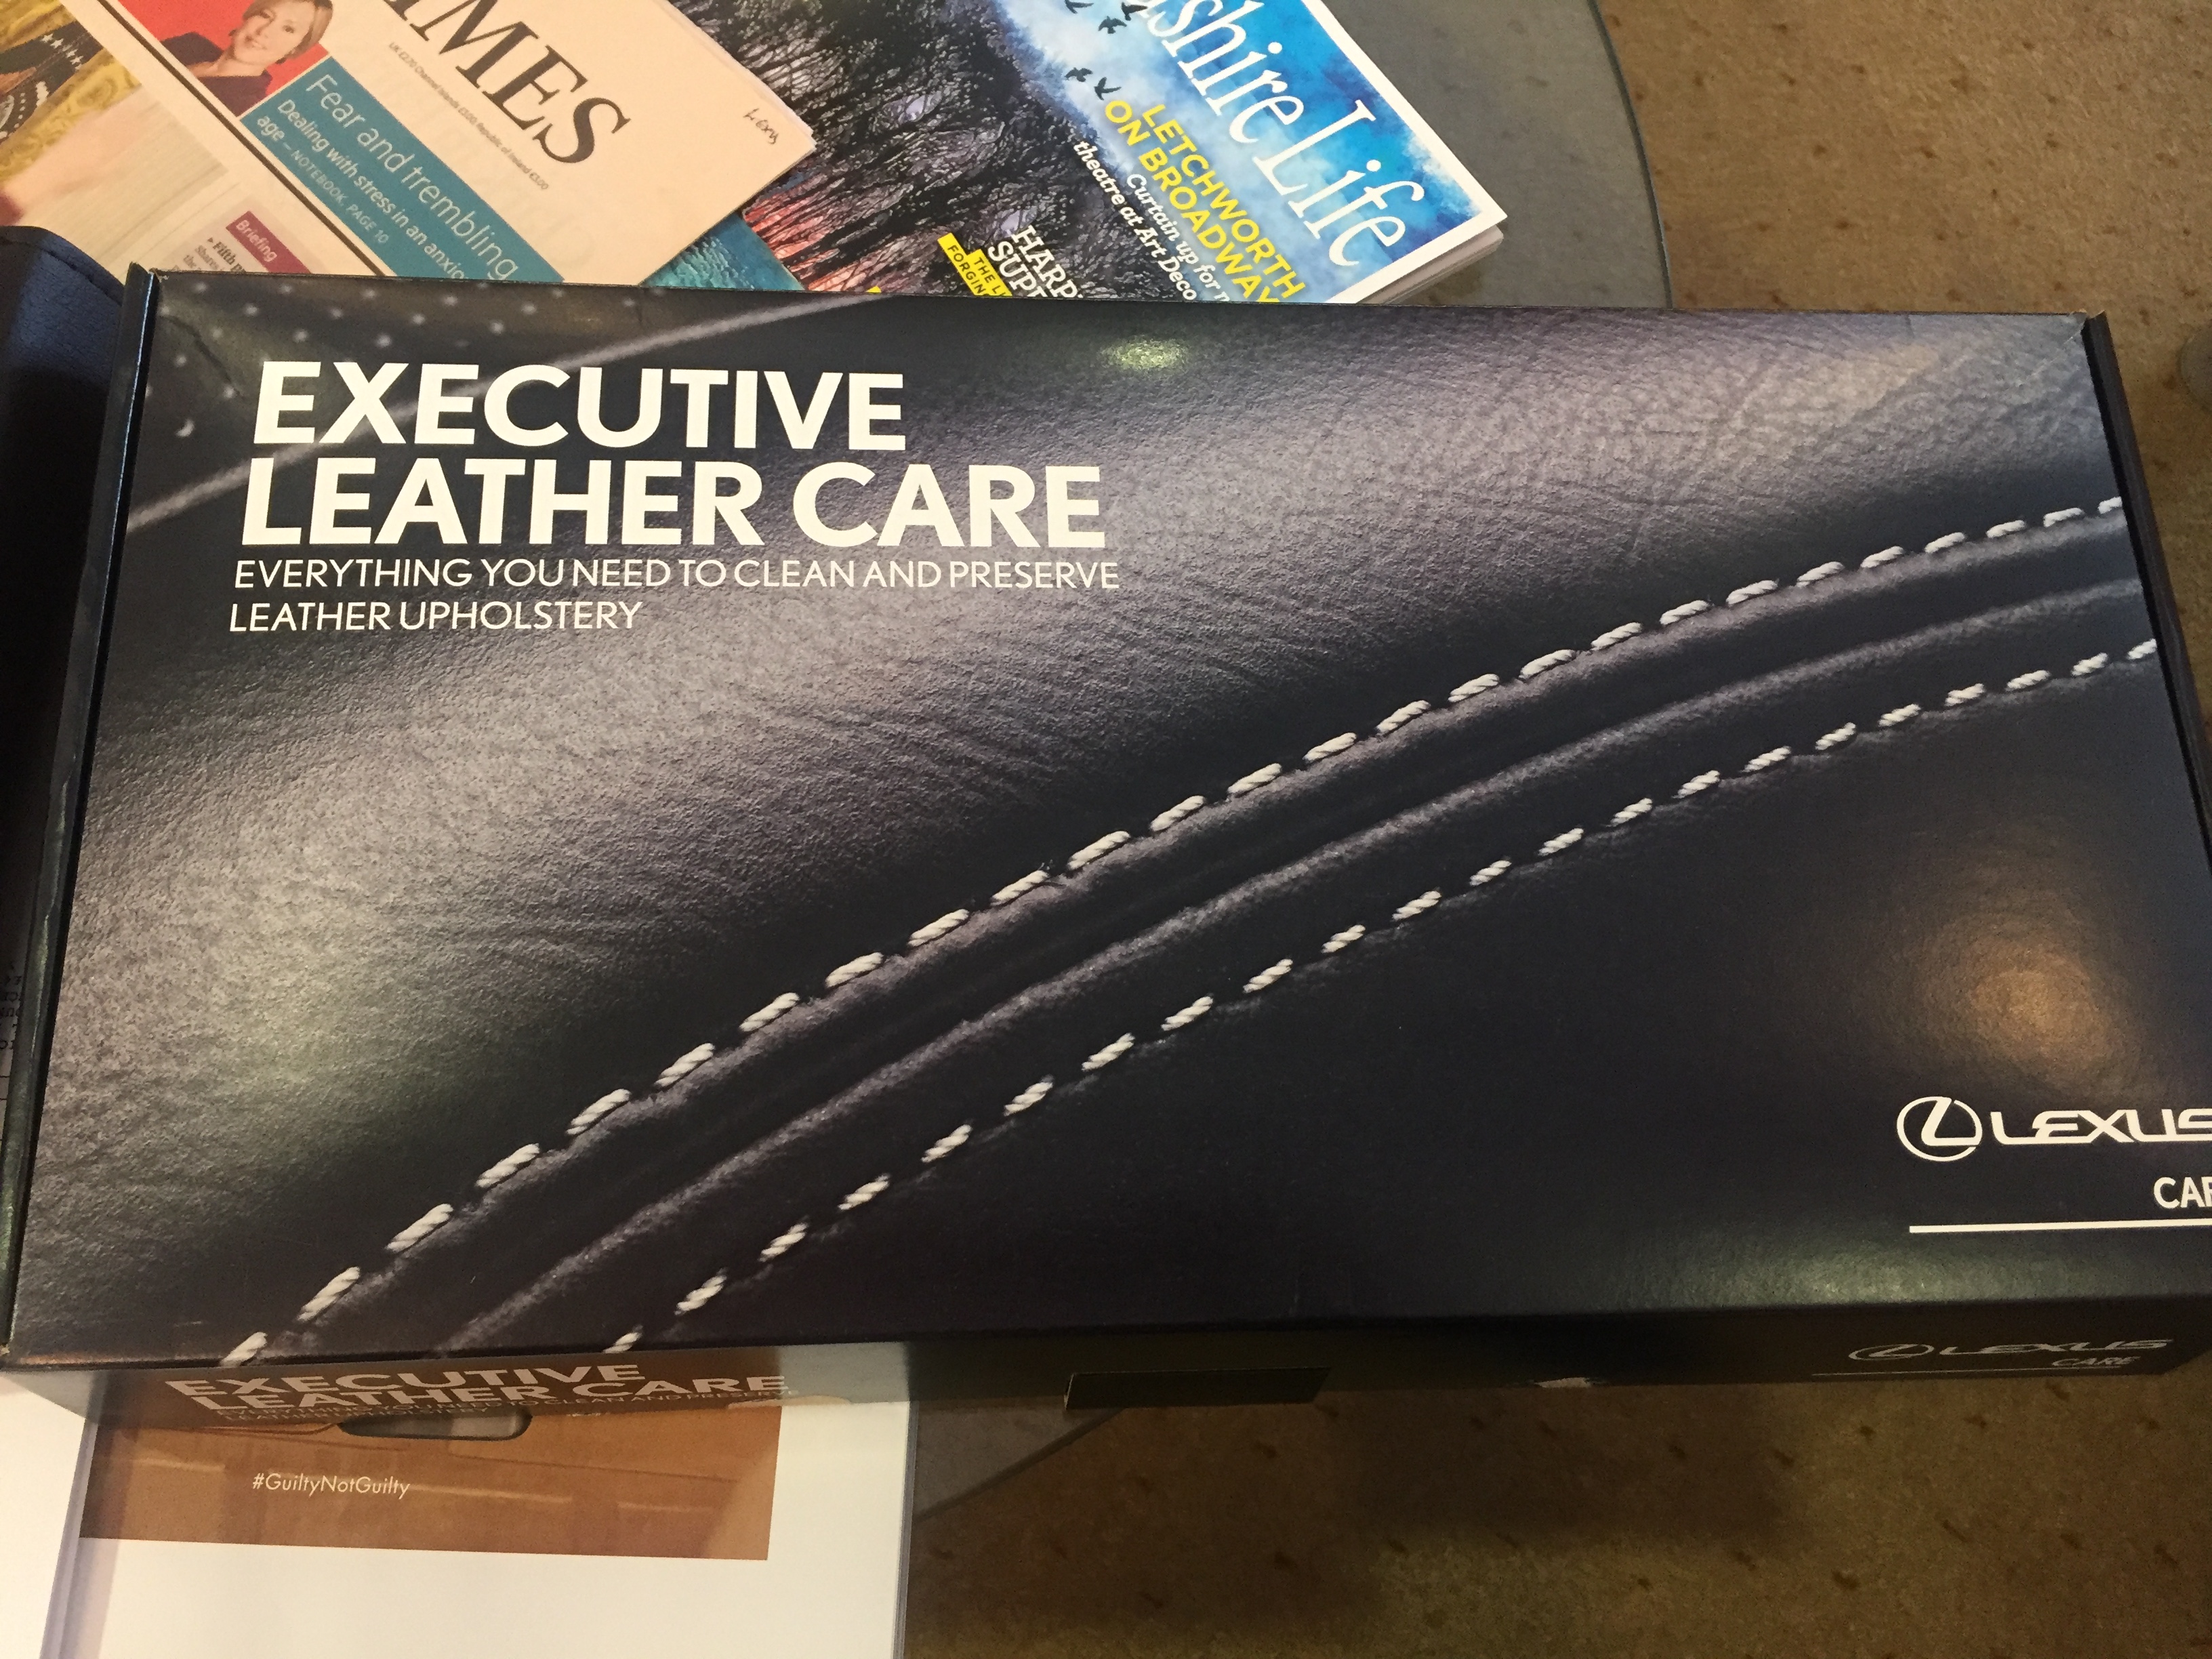 Best conditioner for leather? - ClubLexus - Lexus Forum Discussion